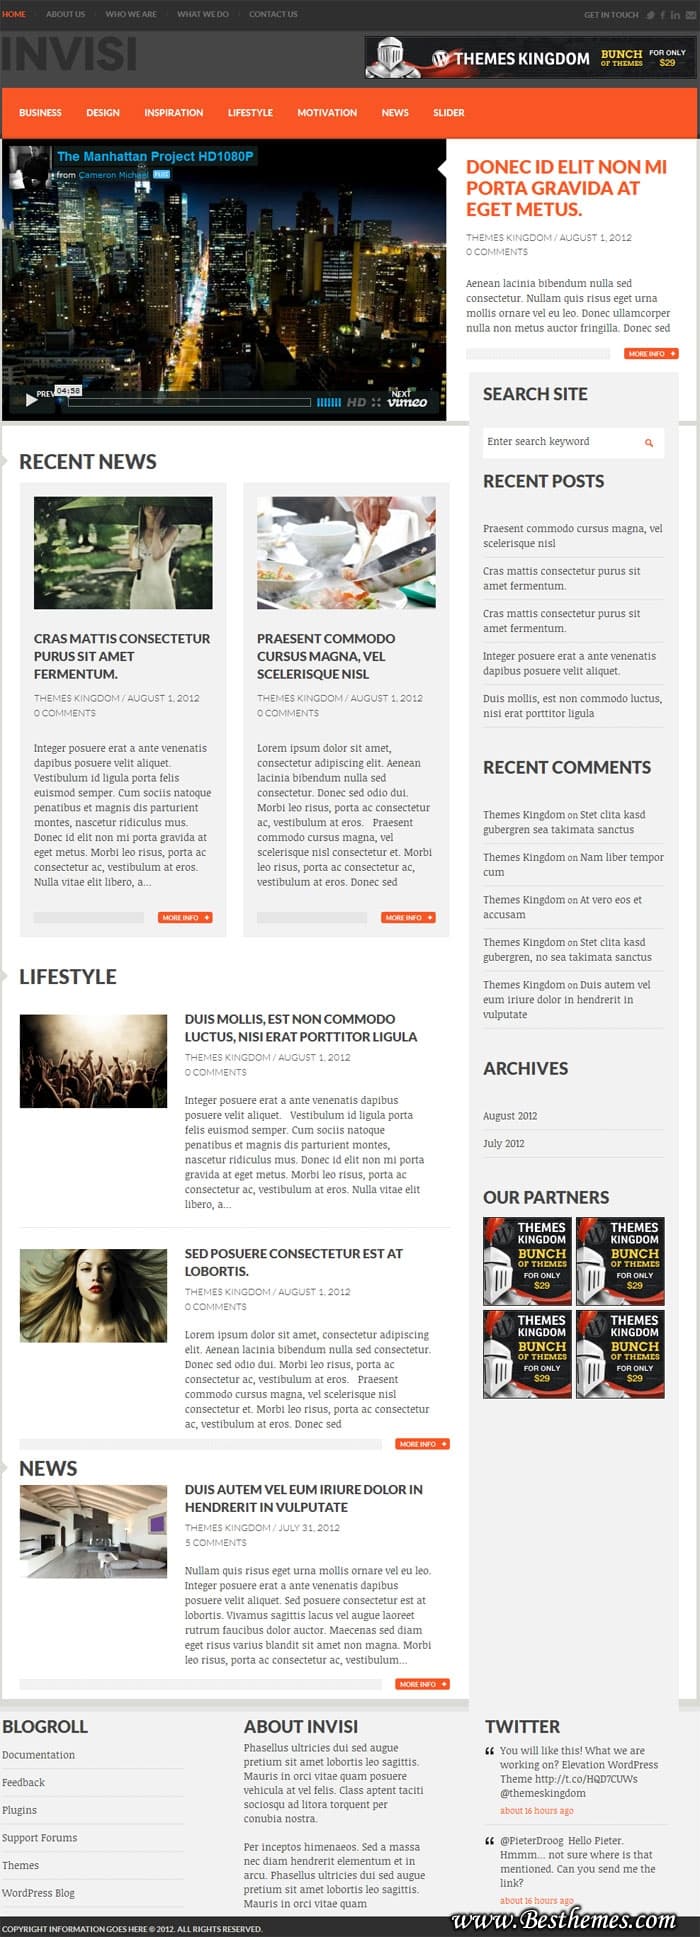 INVISI Premium WordPress Theme from Themes Kingdom, Modern Magazine WP Theme